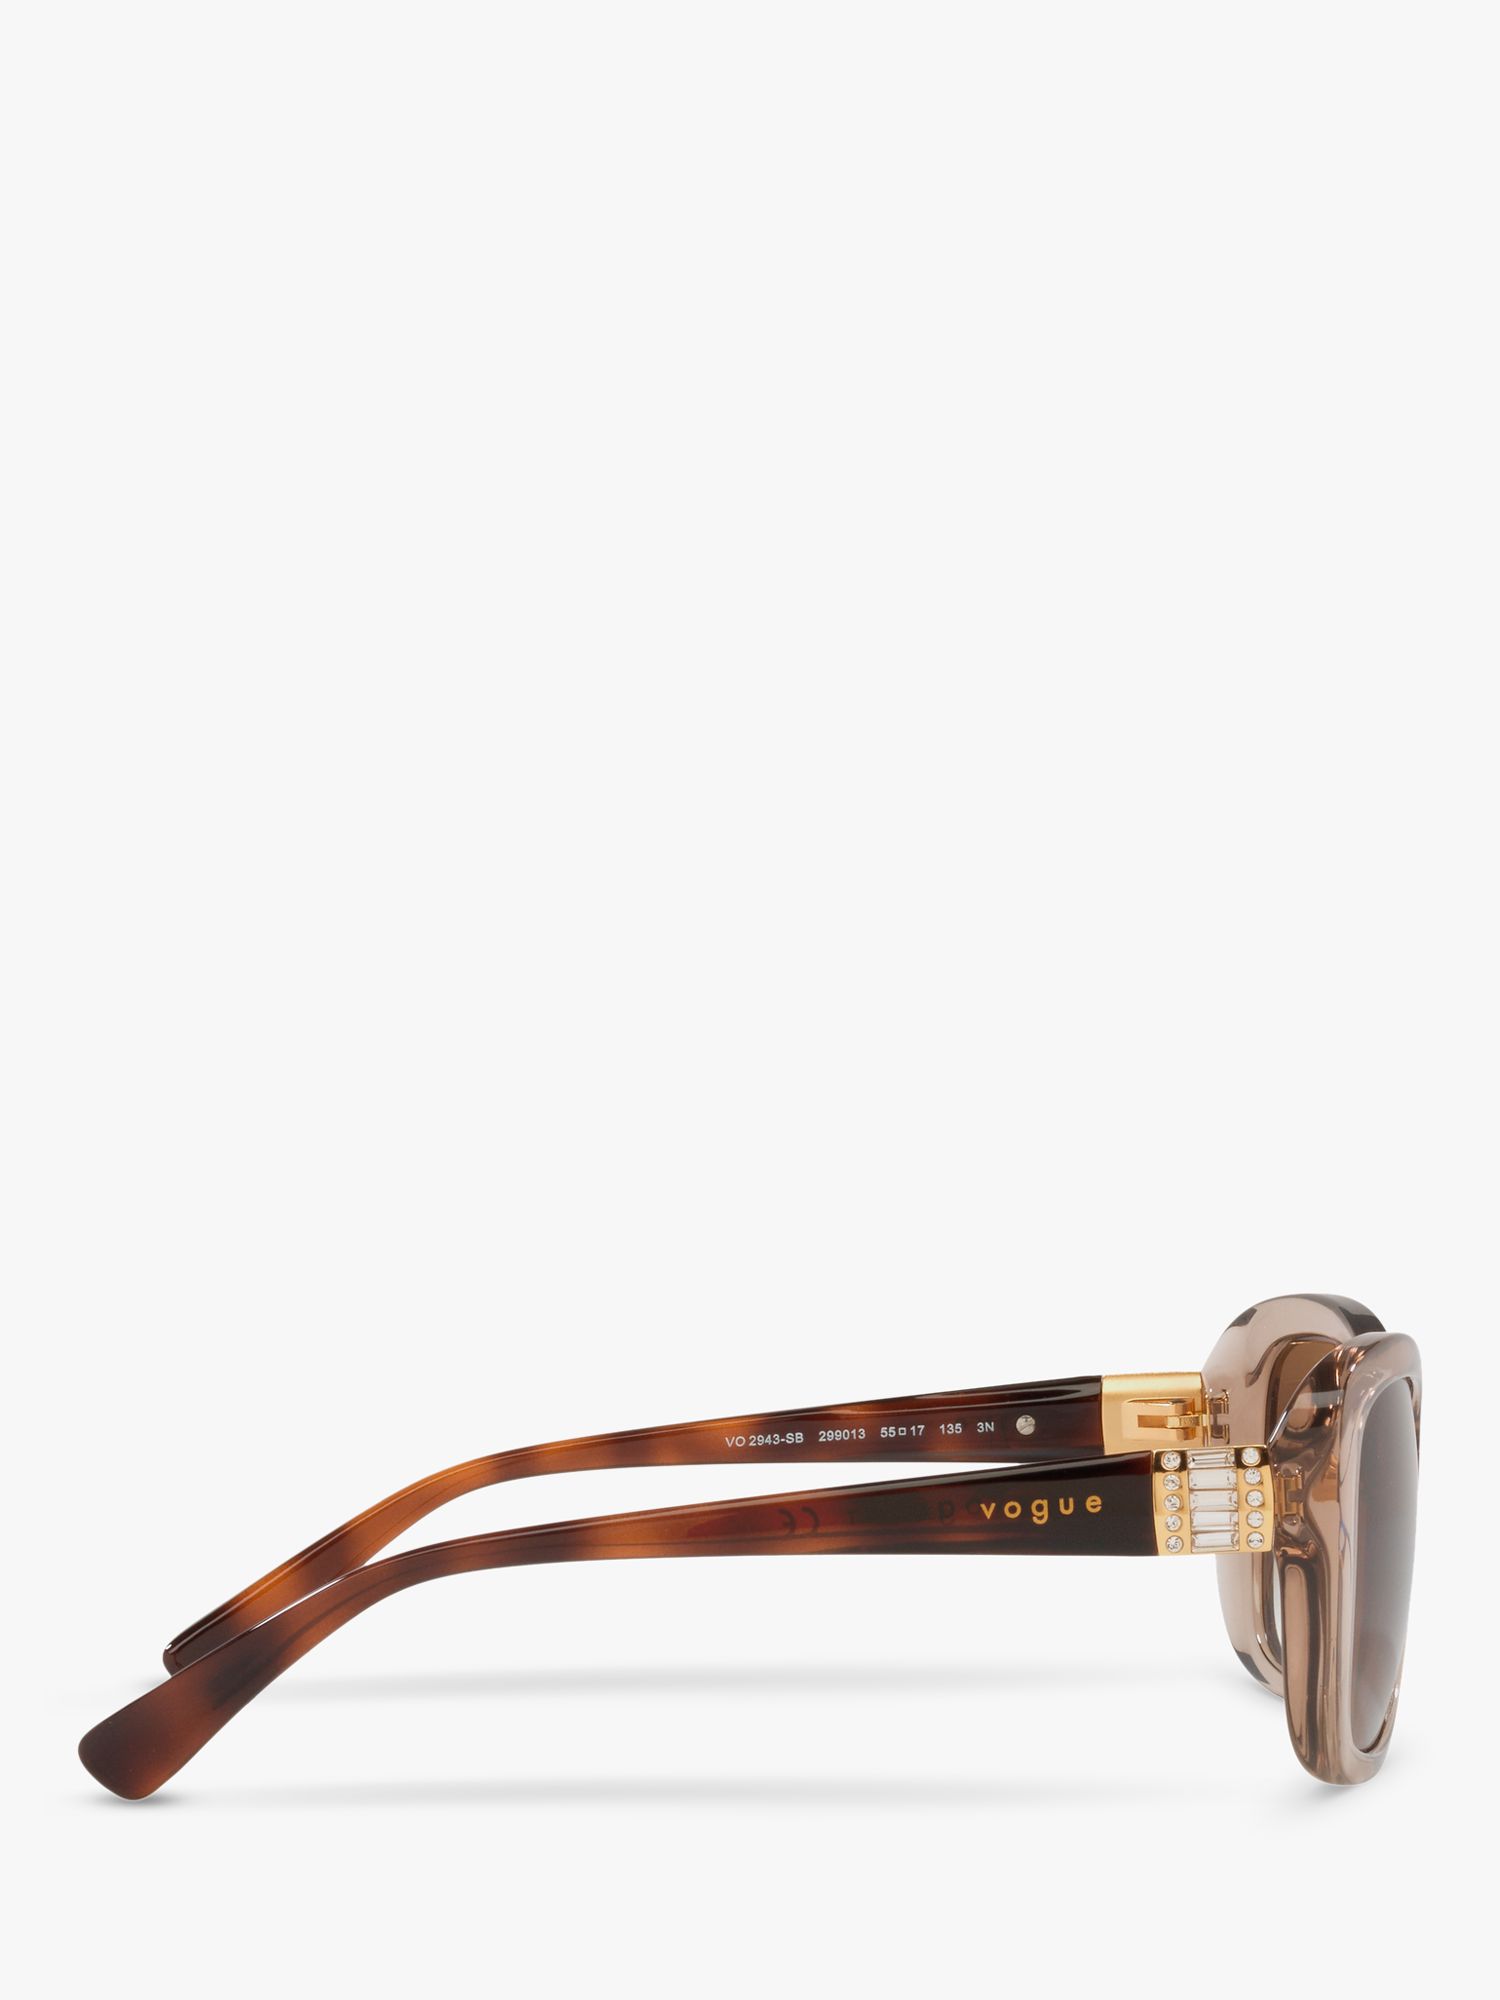 Vogue VO2943SB Women's Butterfly Sunglasses, Transparent Light Brown/Brown Gradient